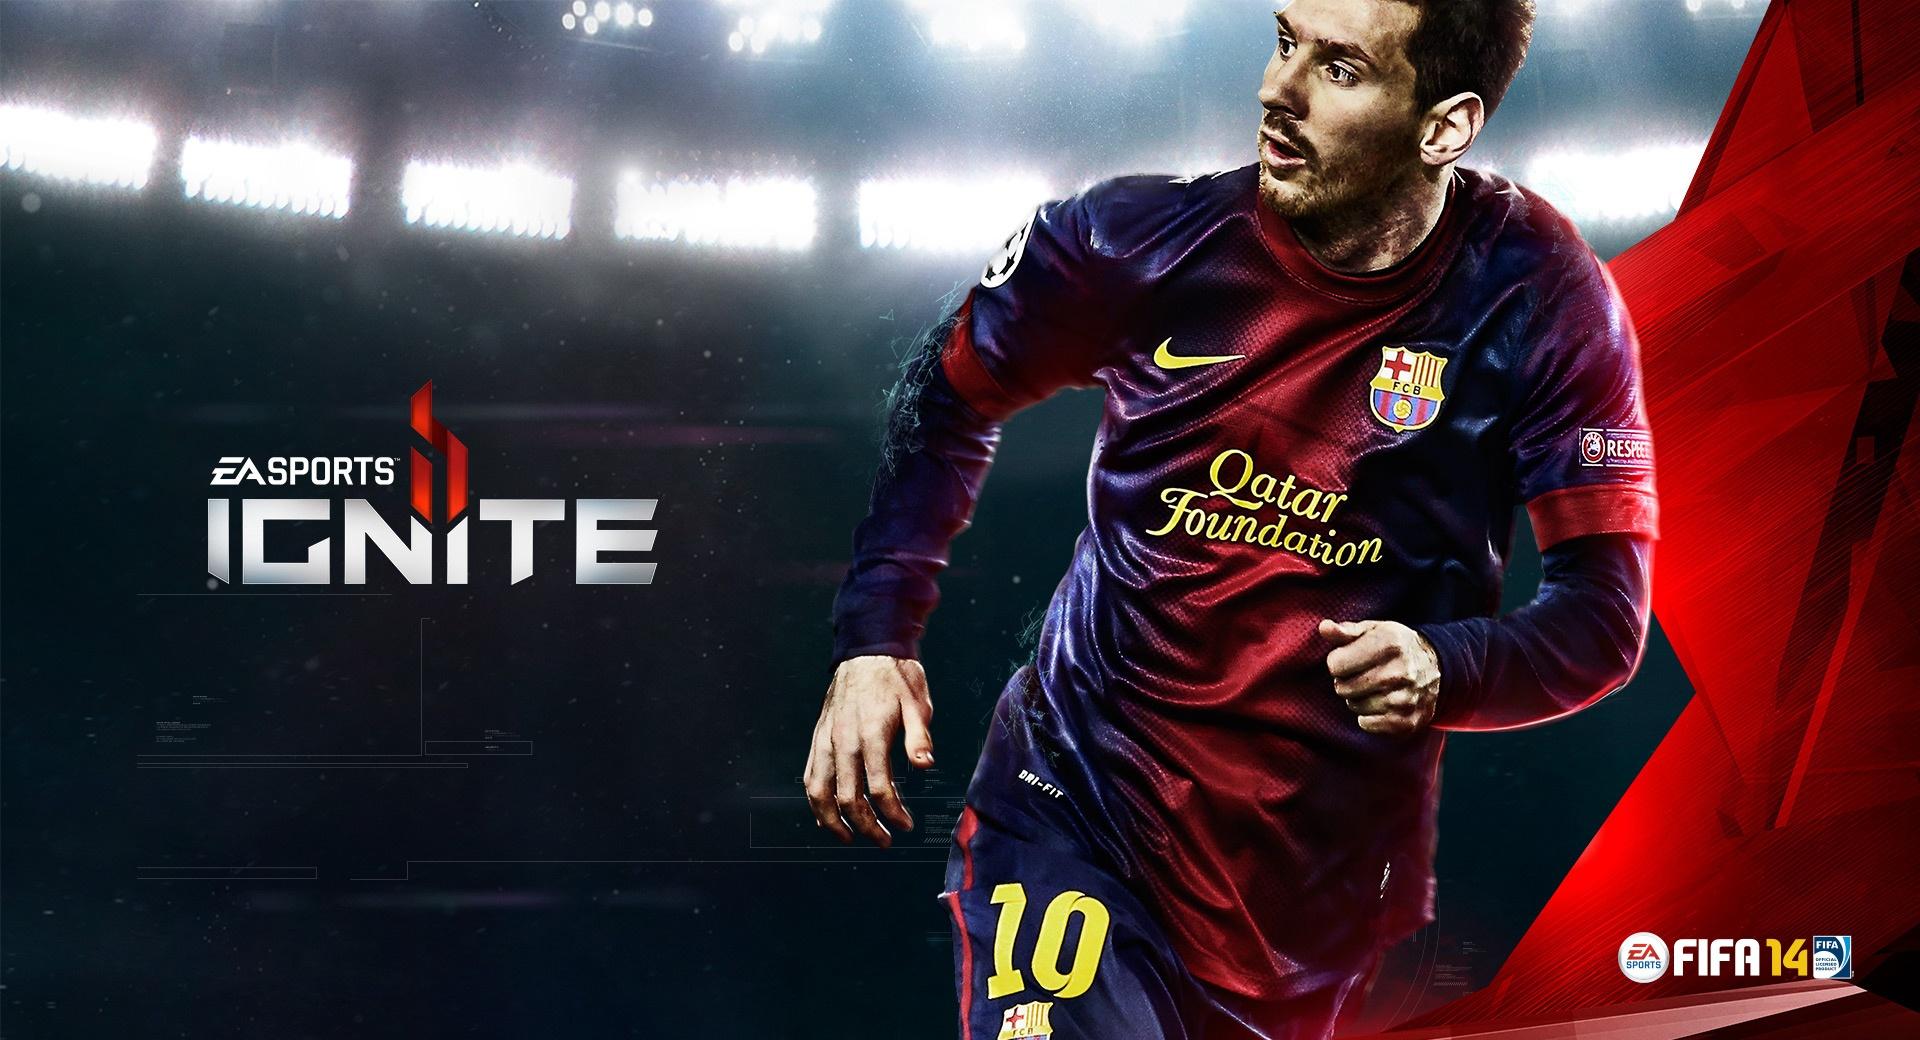 EA Sports Ignite FIFA 14 at 1024 x 1024 iPad size wallpapers HD quality